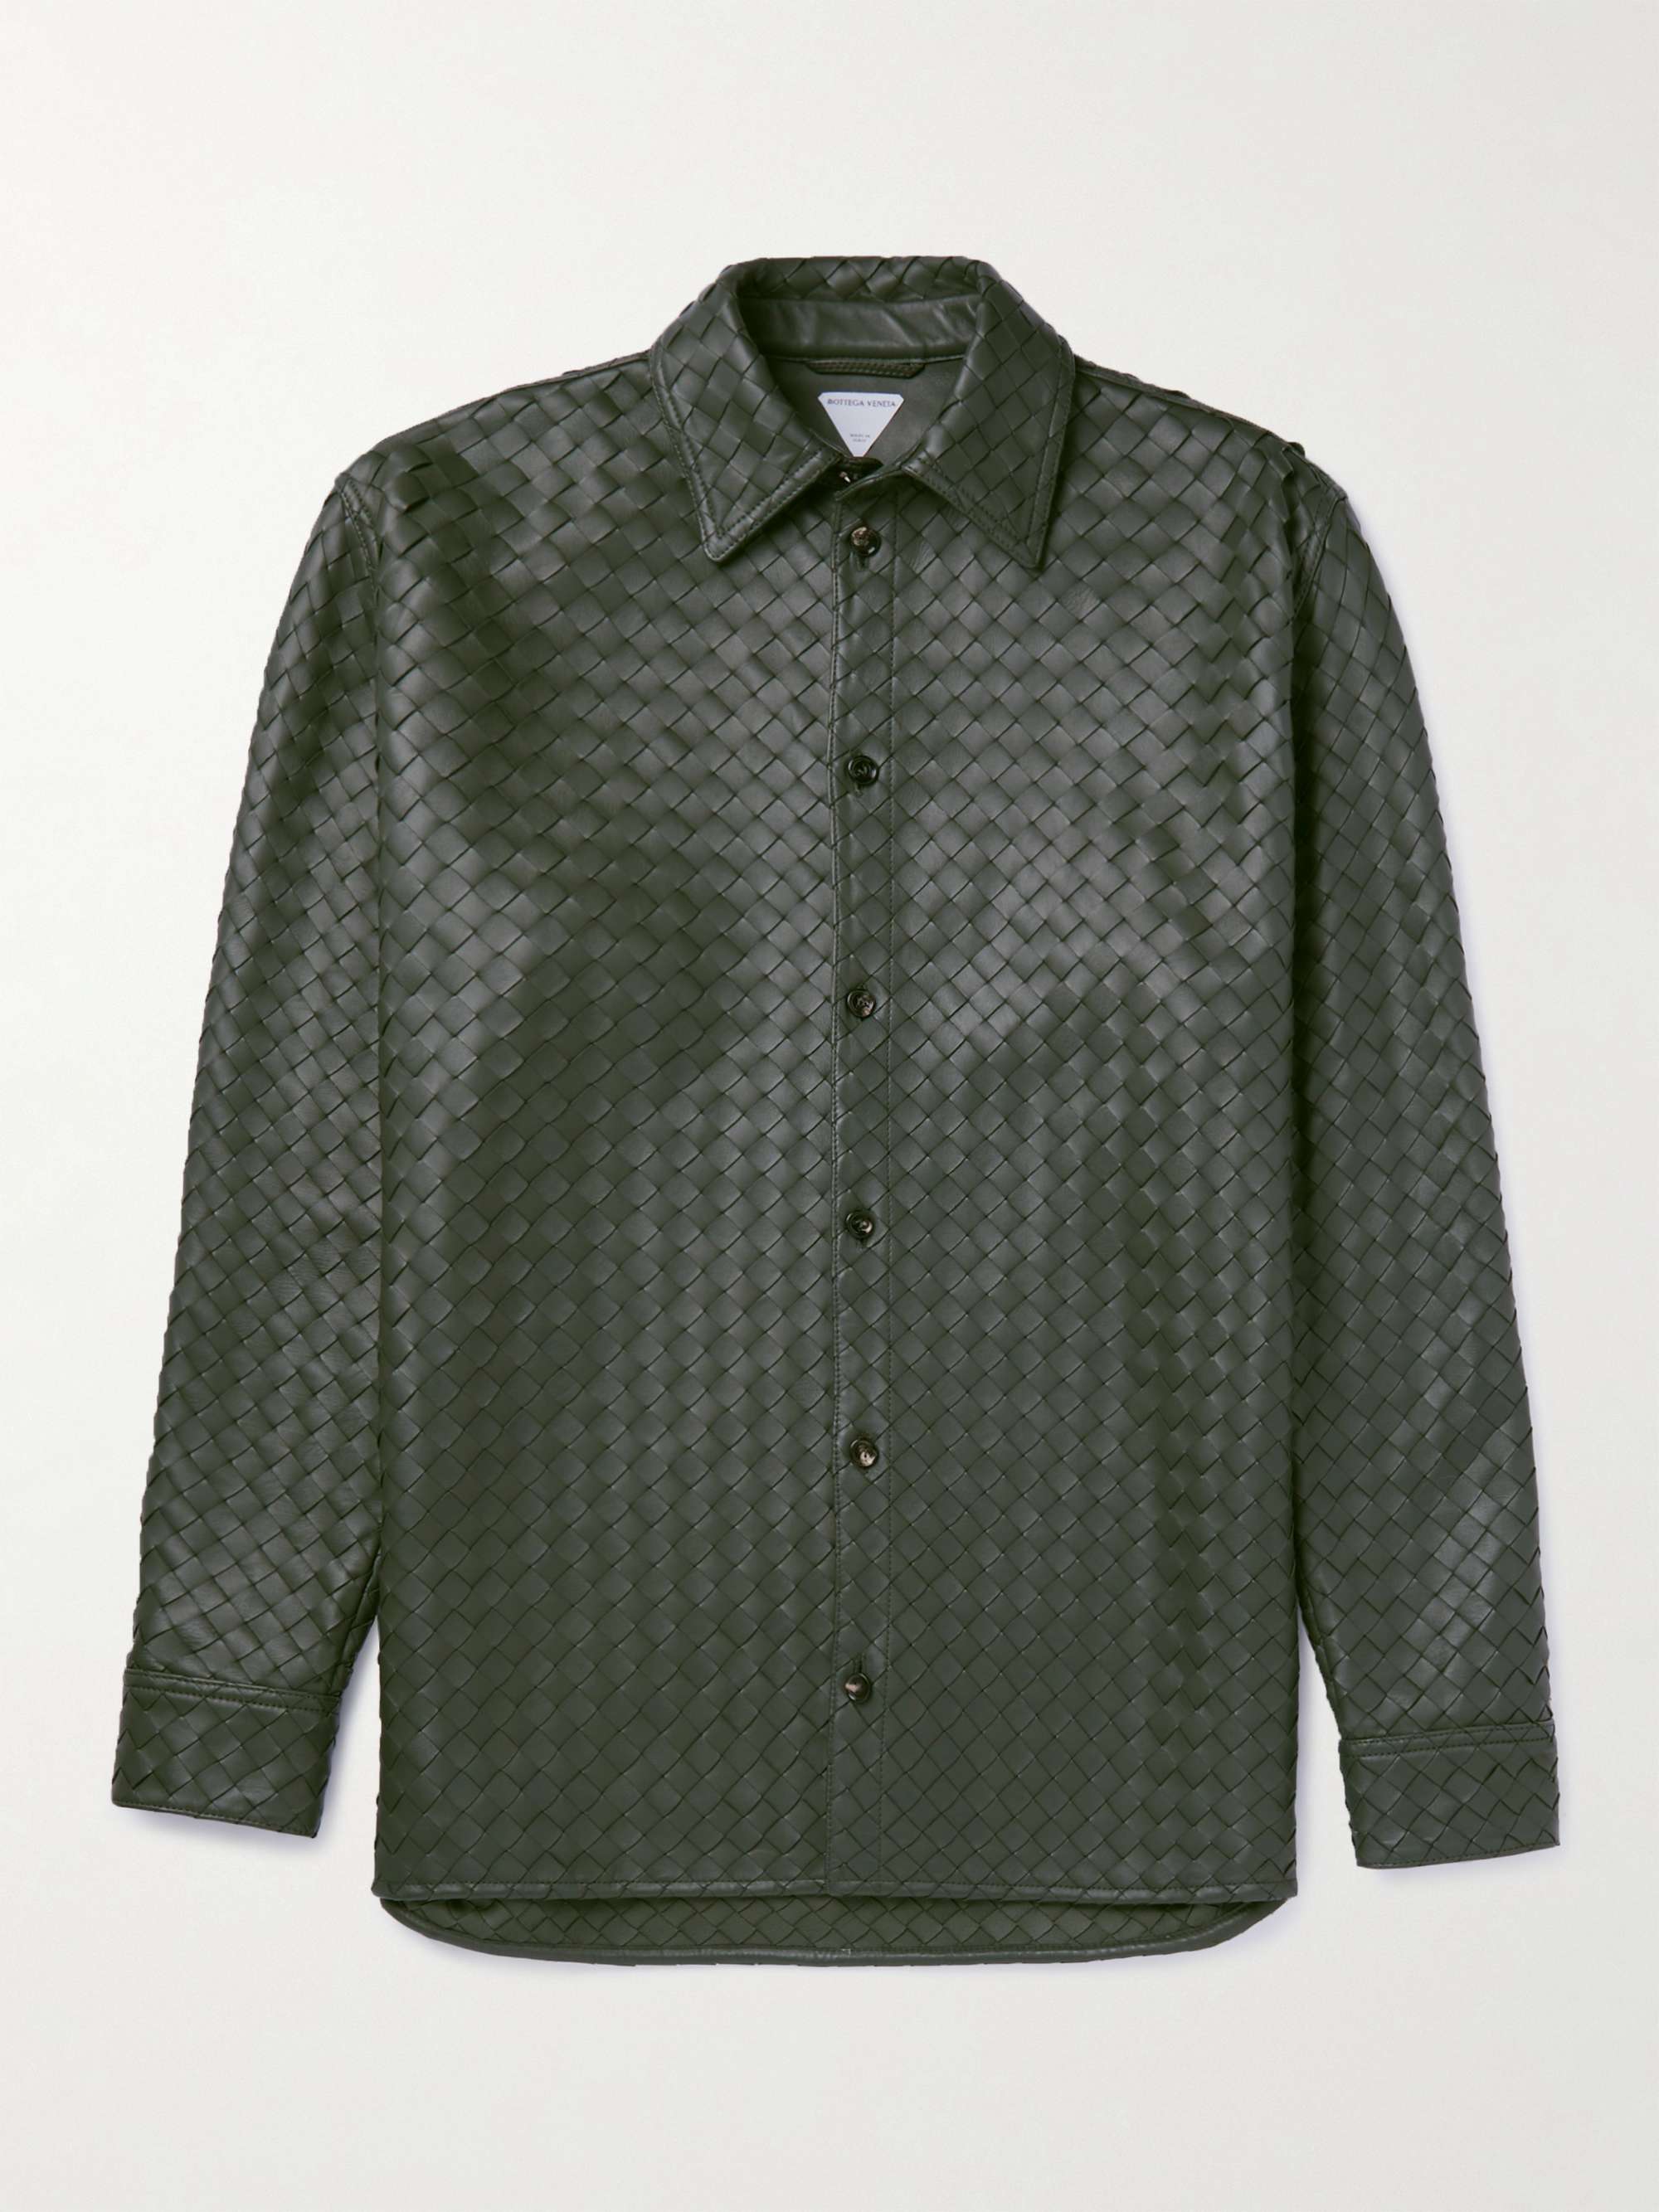 Bottega Veneta Intrecciato Leather Shirt - Men - Green - It 46